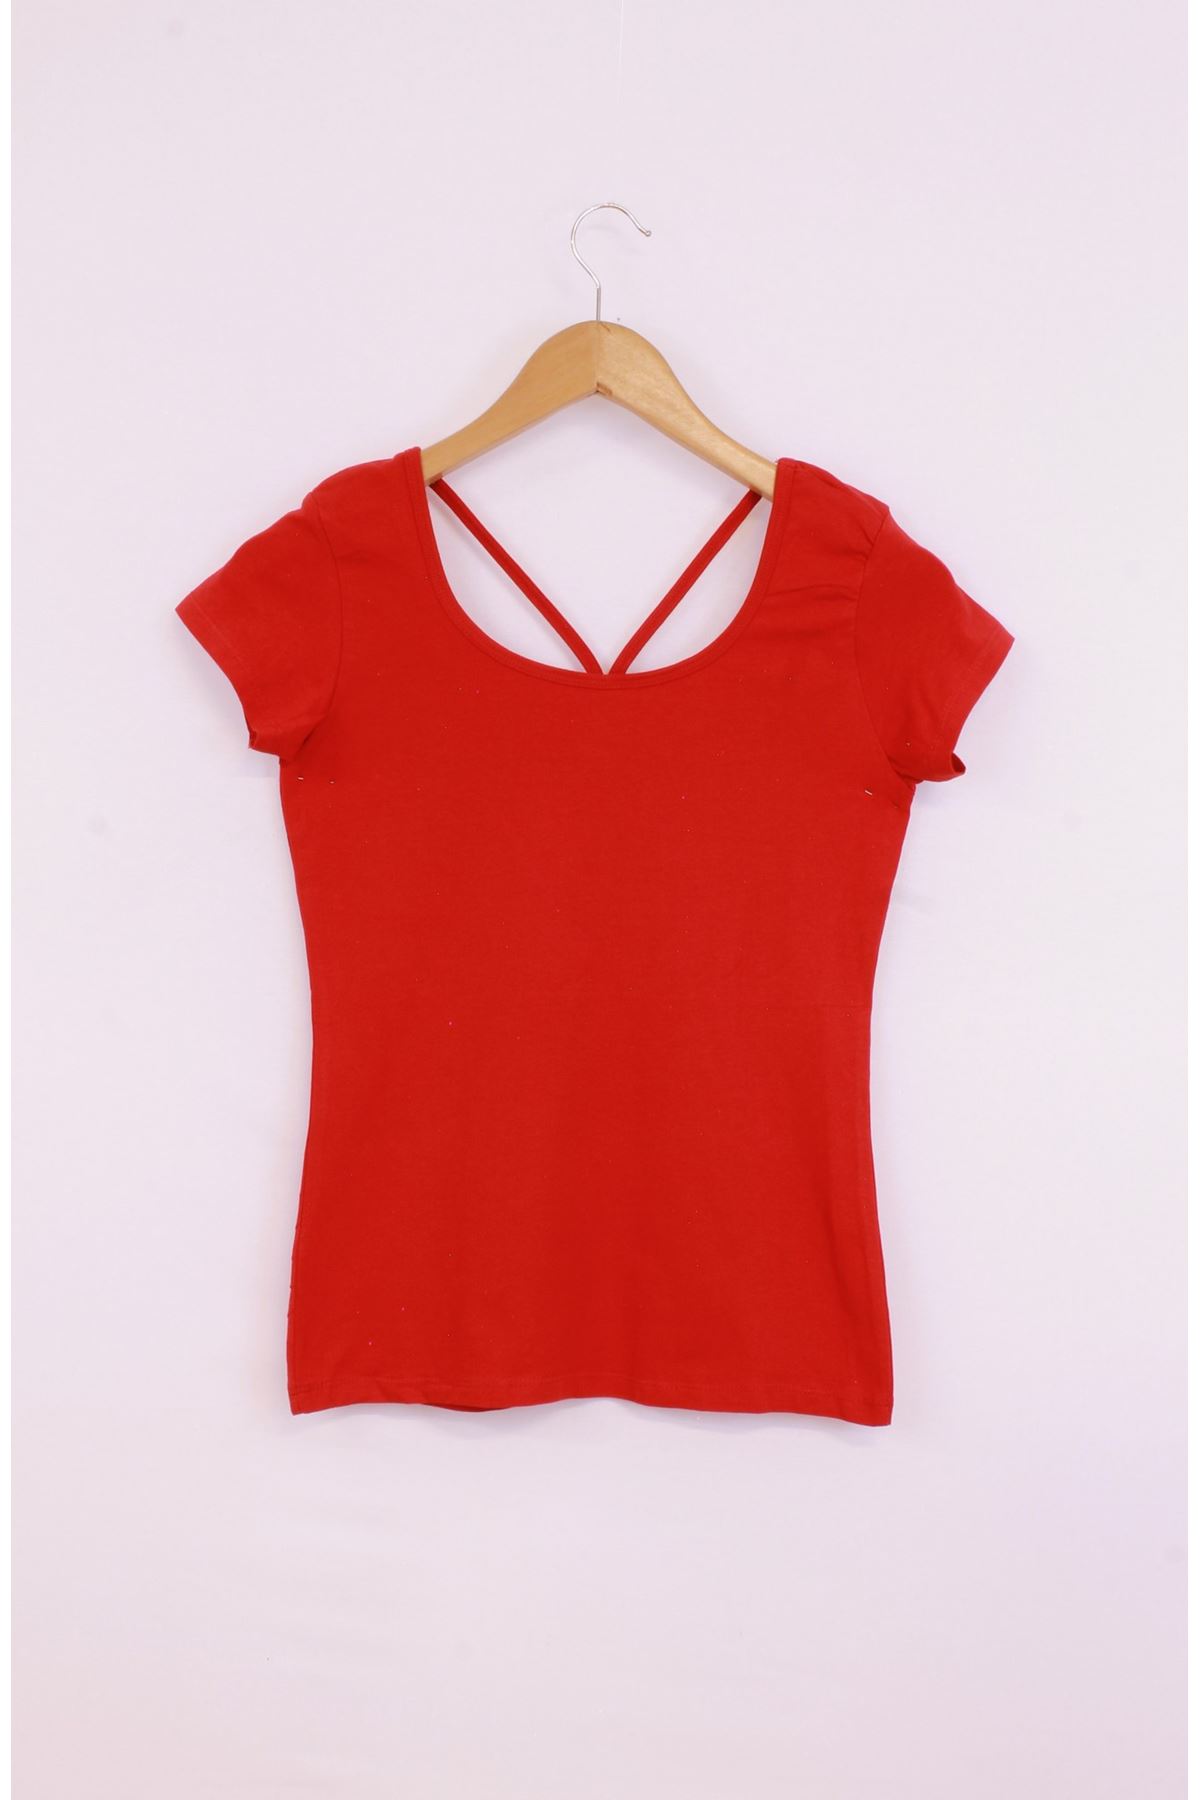 Giyinsen Kadın Kırmızı Tişört - 23YL71595007